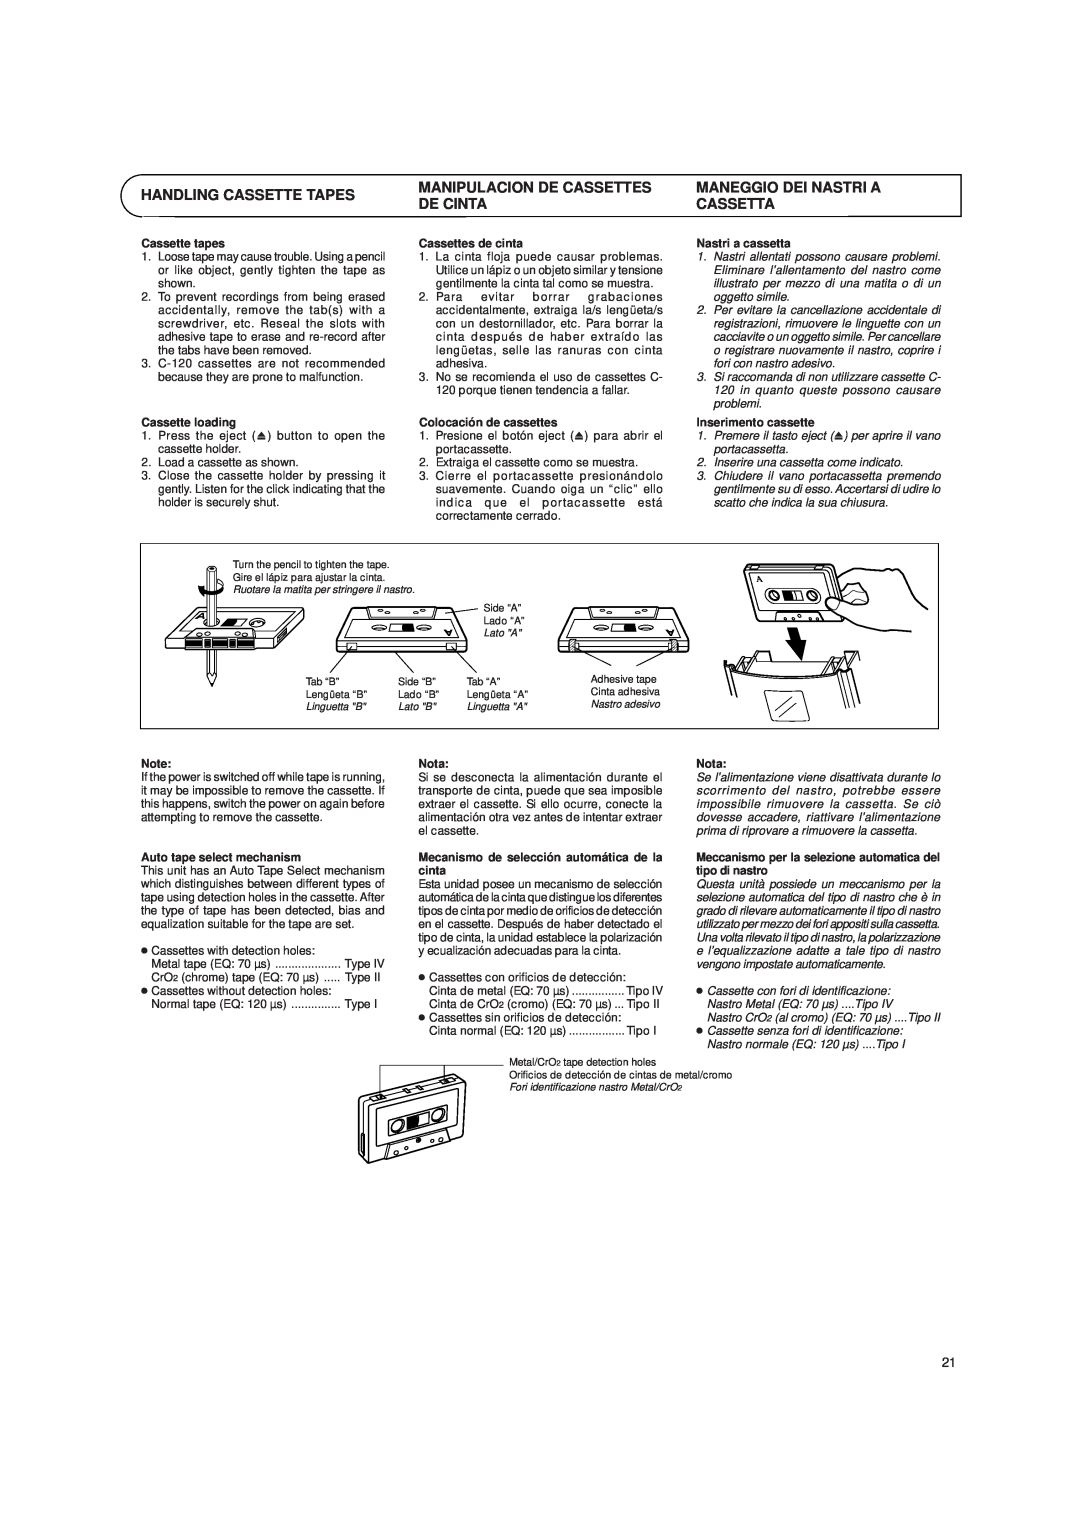 JVC UX-T150, UX-T151 manual Handling Cassette Tapes, Manipulacion De Cassettes, Maneggio Dei Nastri A, De Cinta, Cassetta 